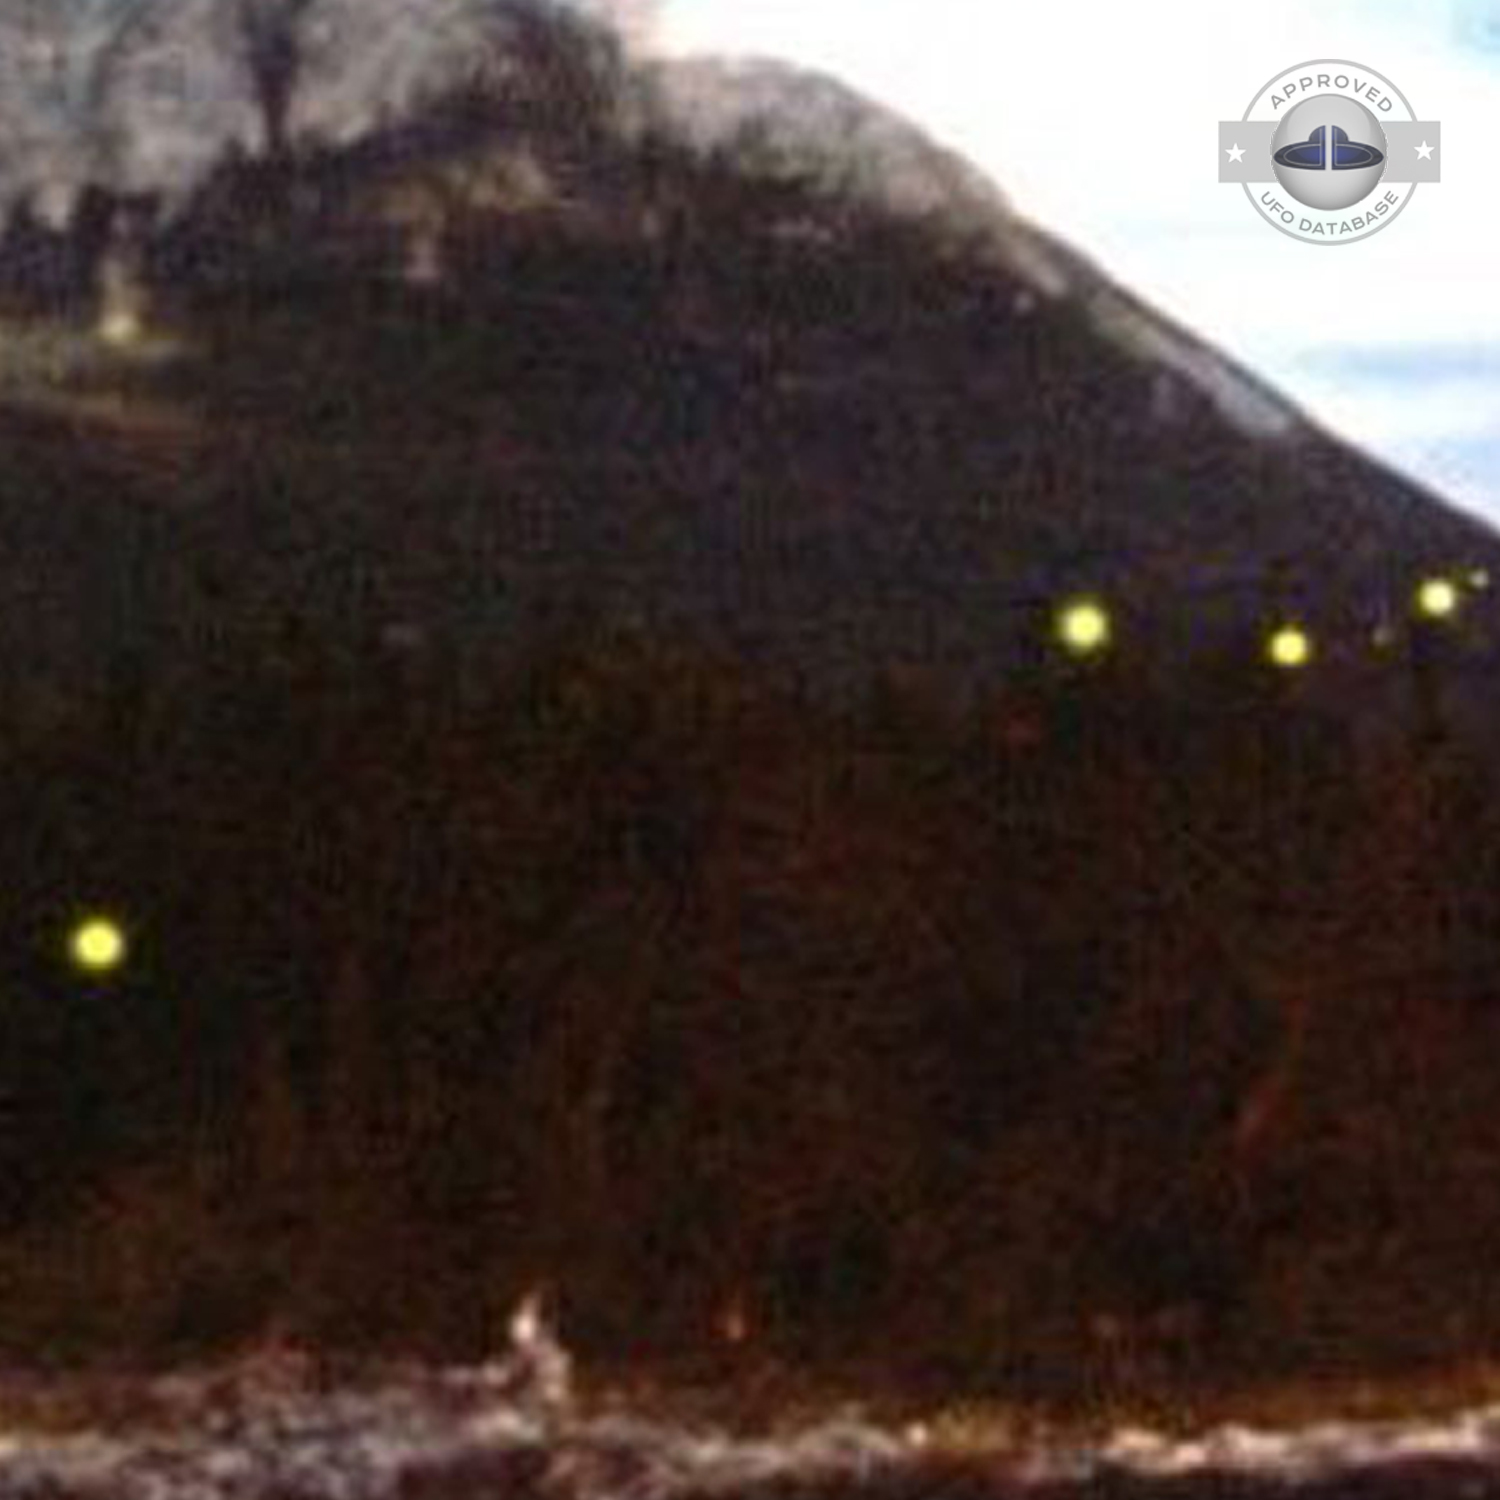 UFO over the Tagish lake in the Yukon territory and British Columbia UFO Picture #44-4